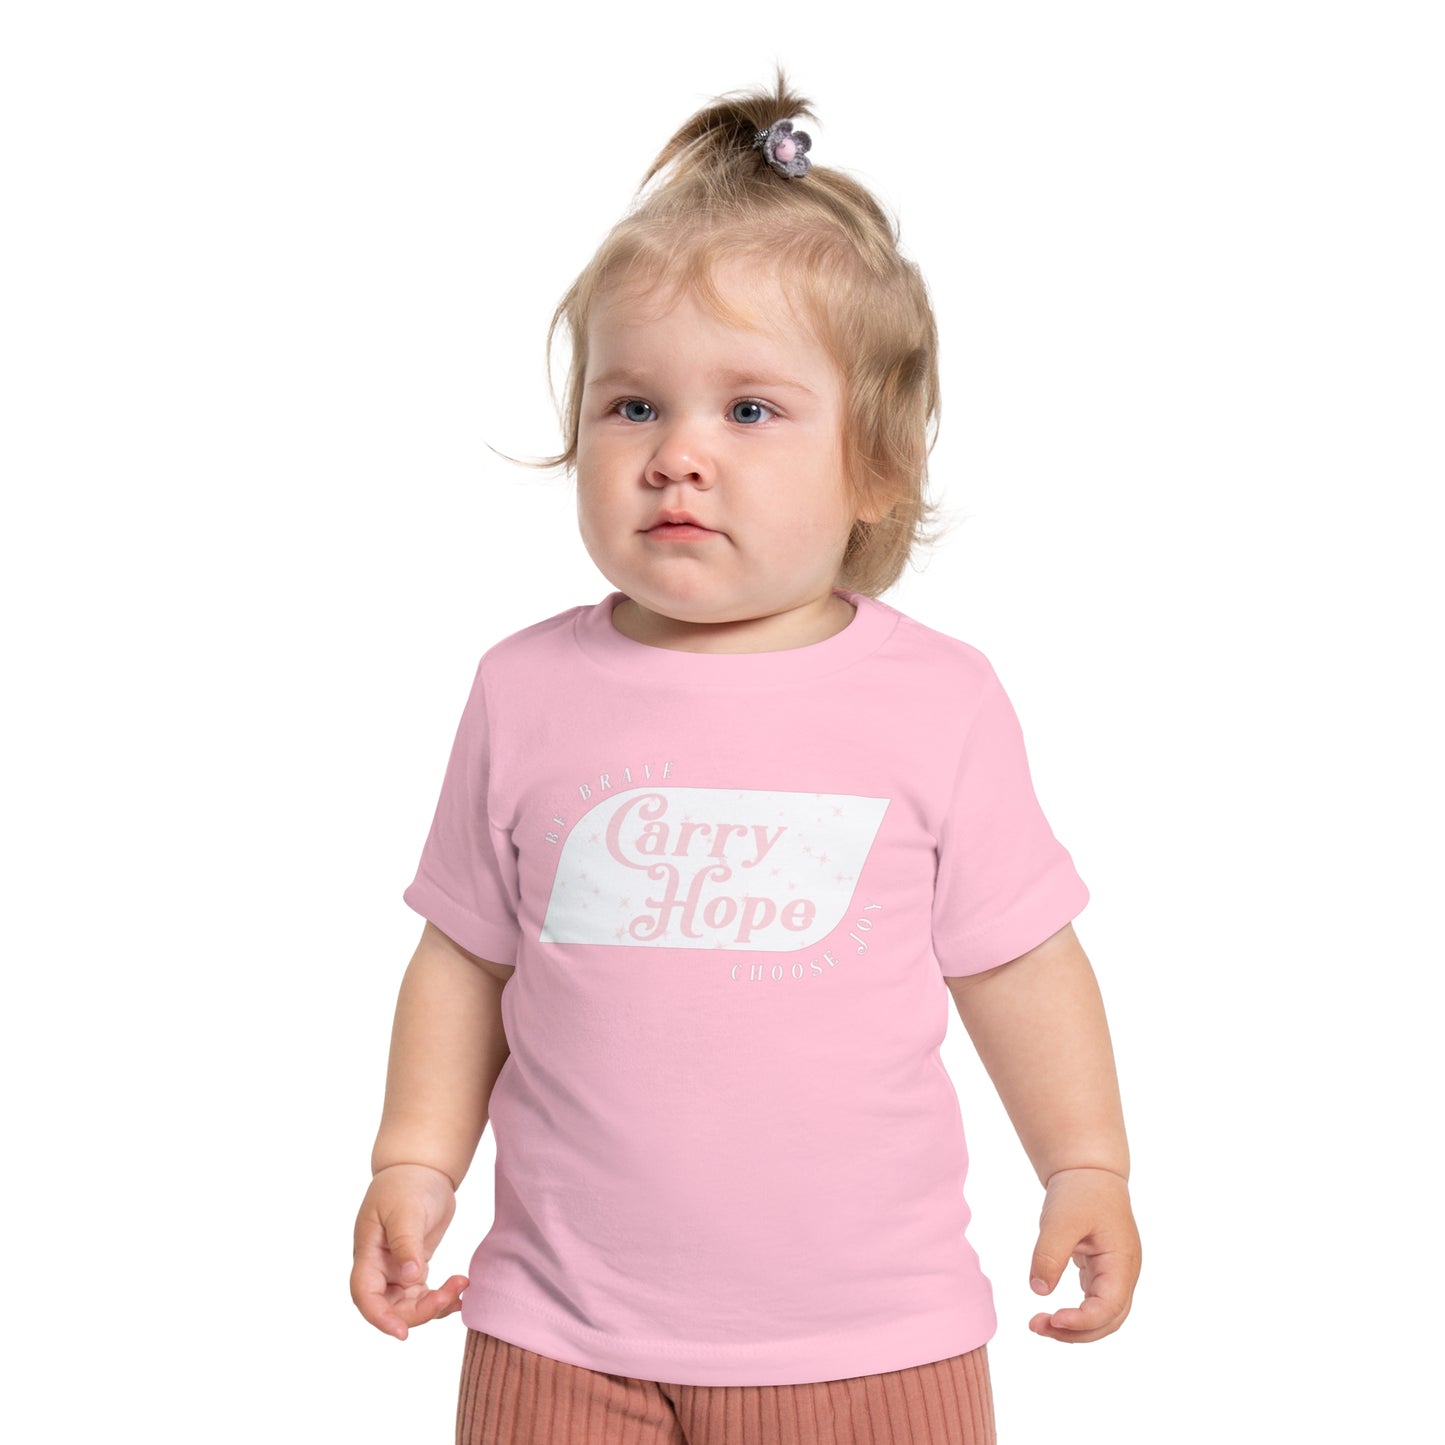 Carry Hope - Toddler T-Shirt